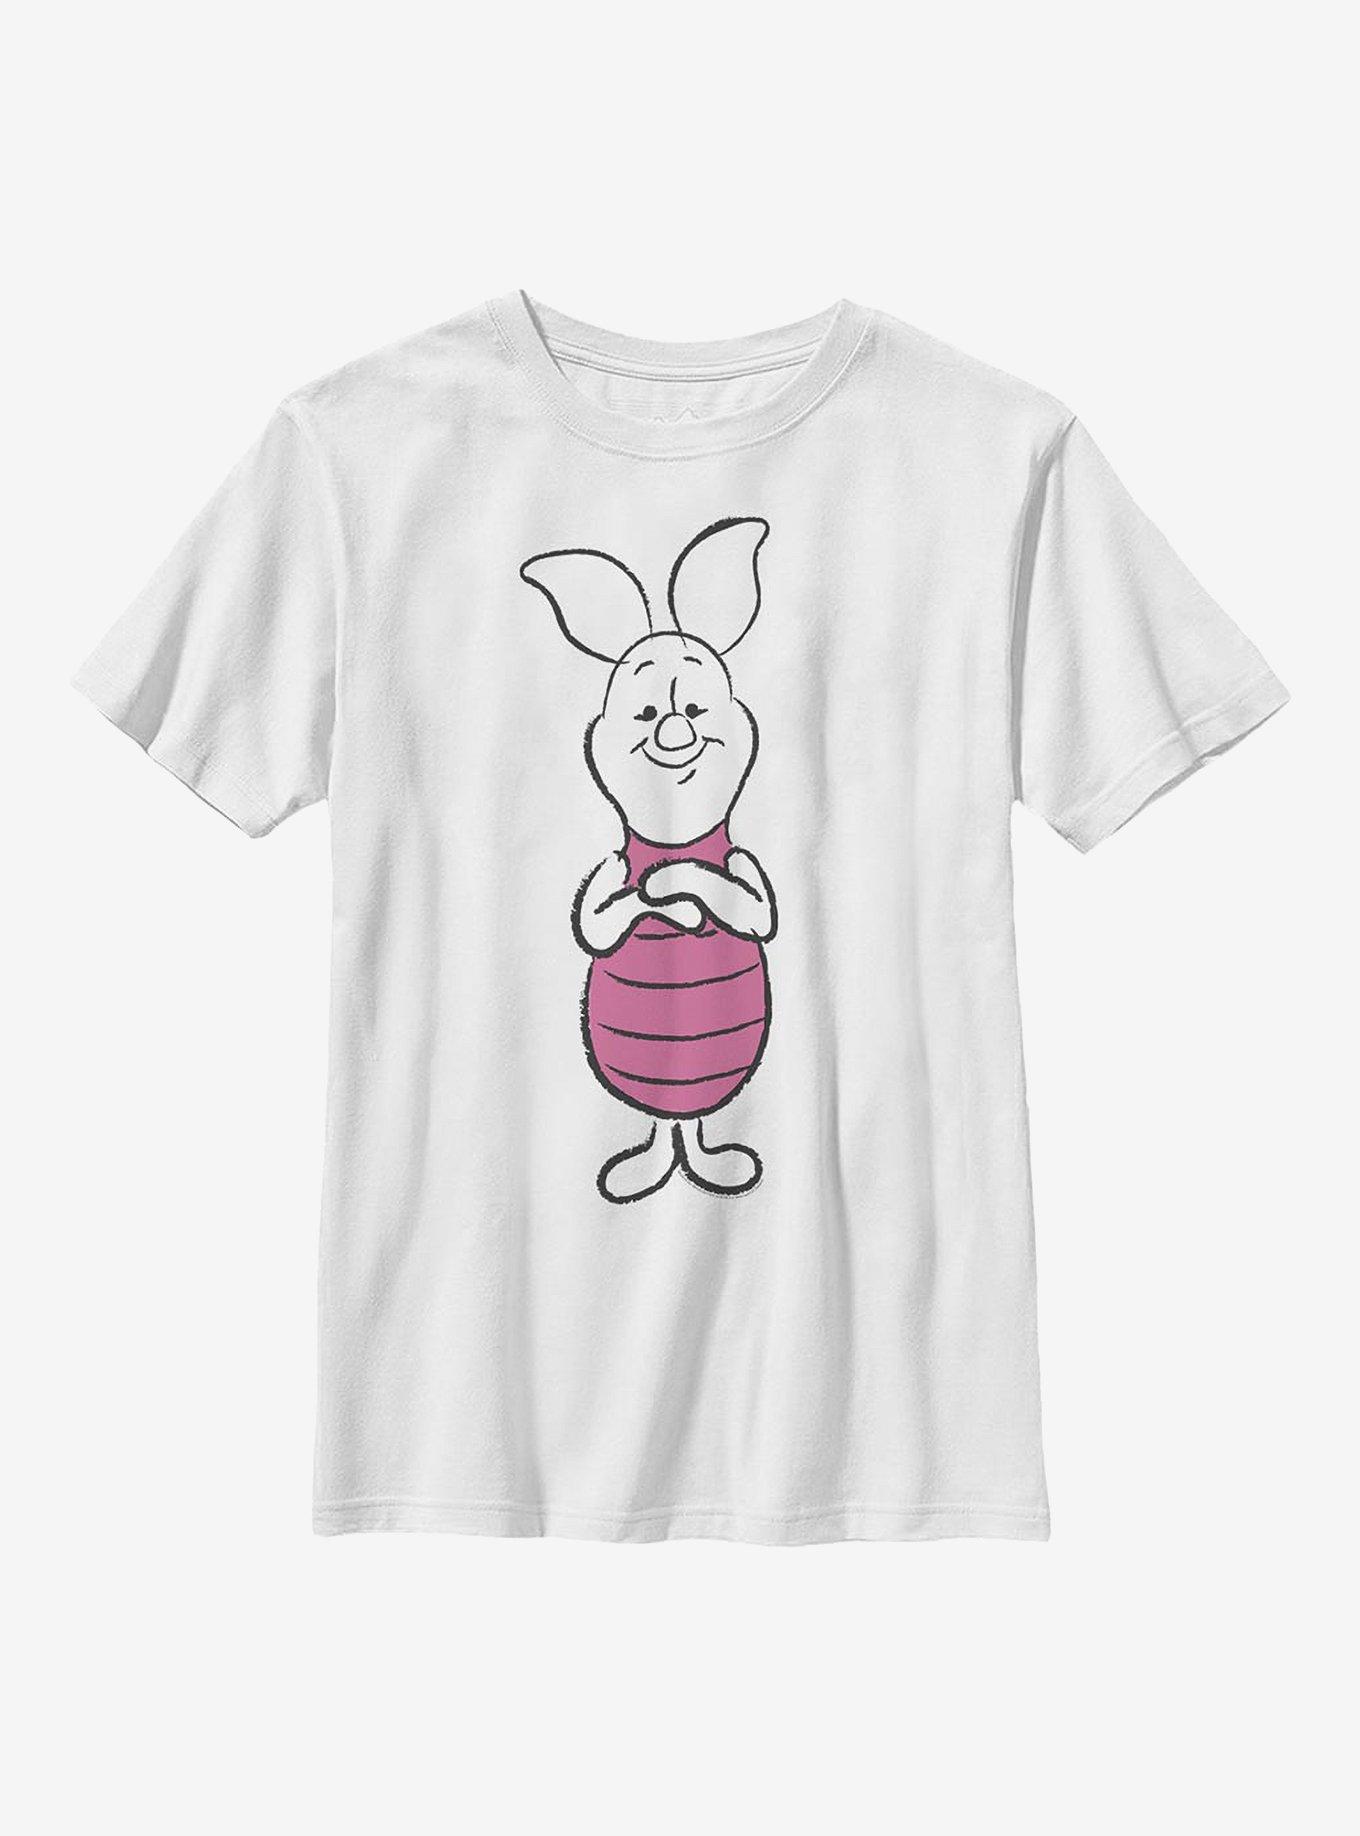 Piglet Winnie The Pooh White Pink Disney Baseball Jerseys For Men And Women